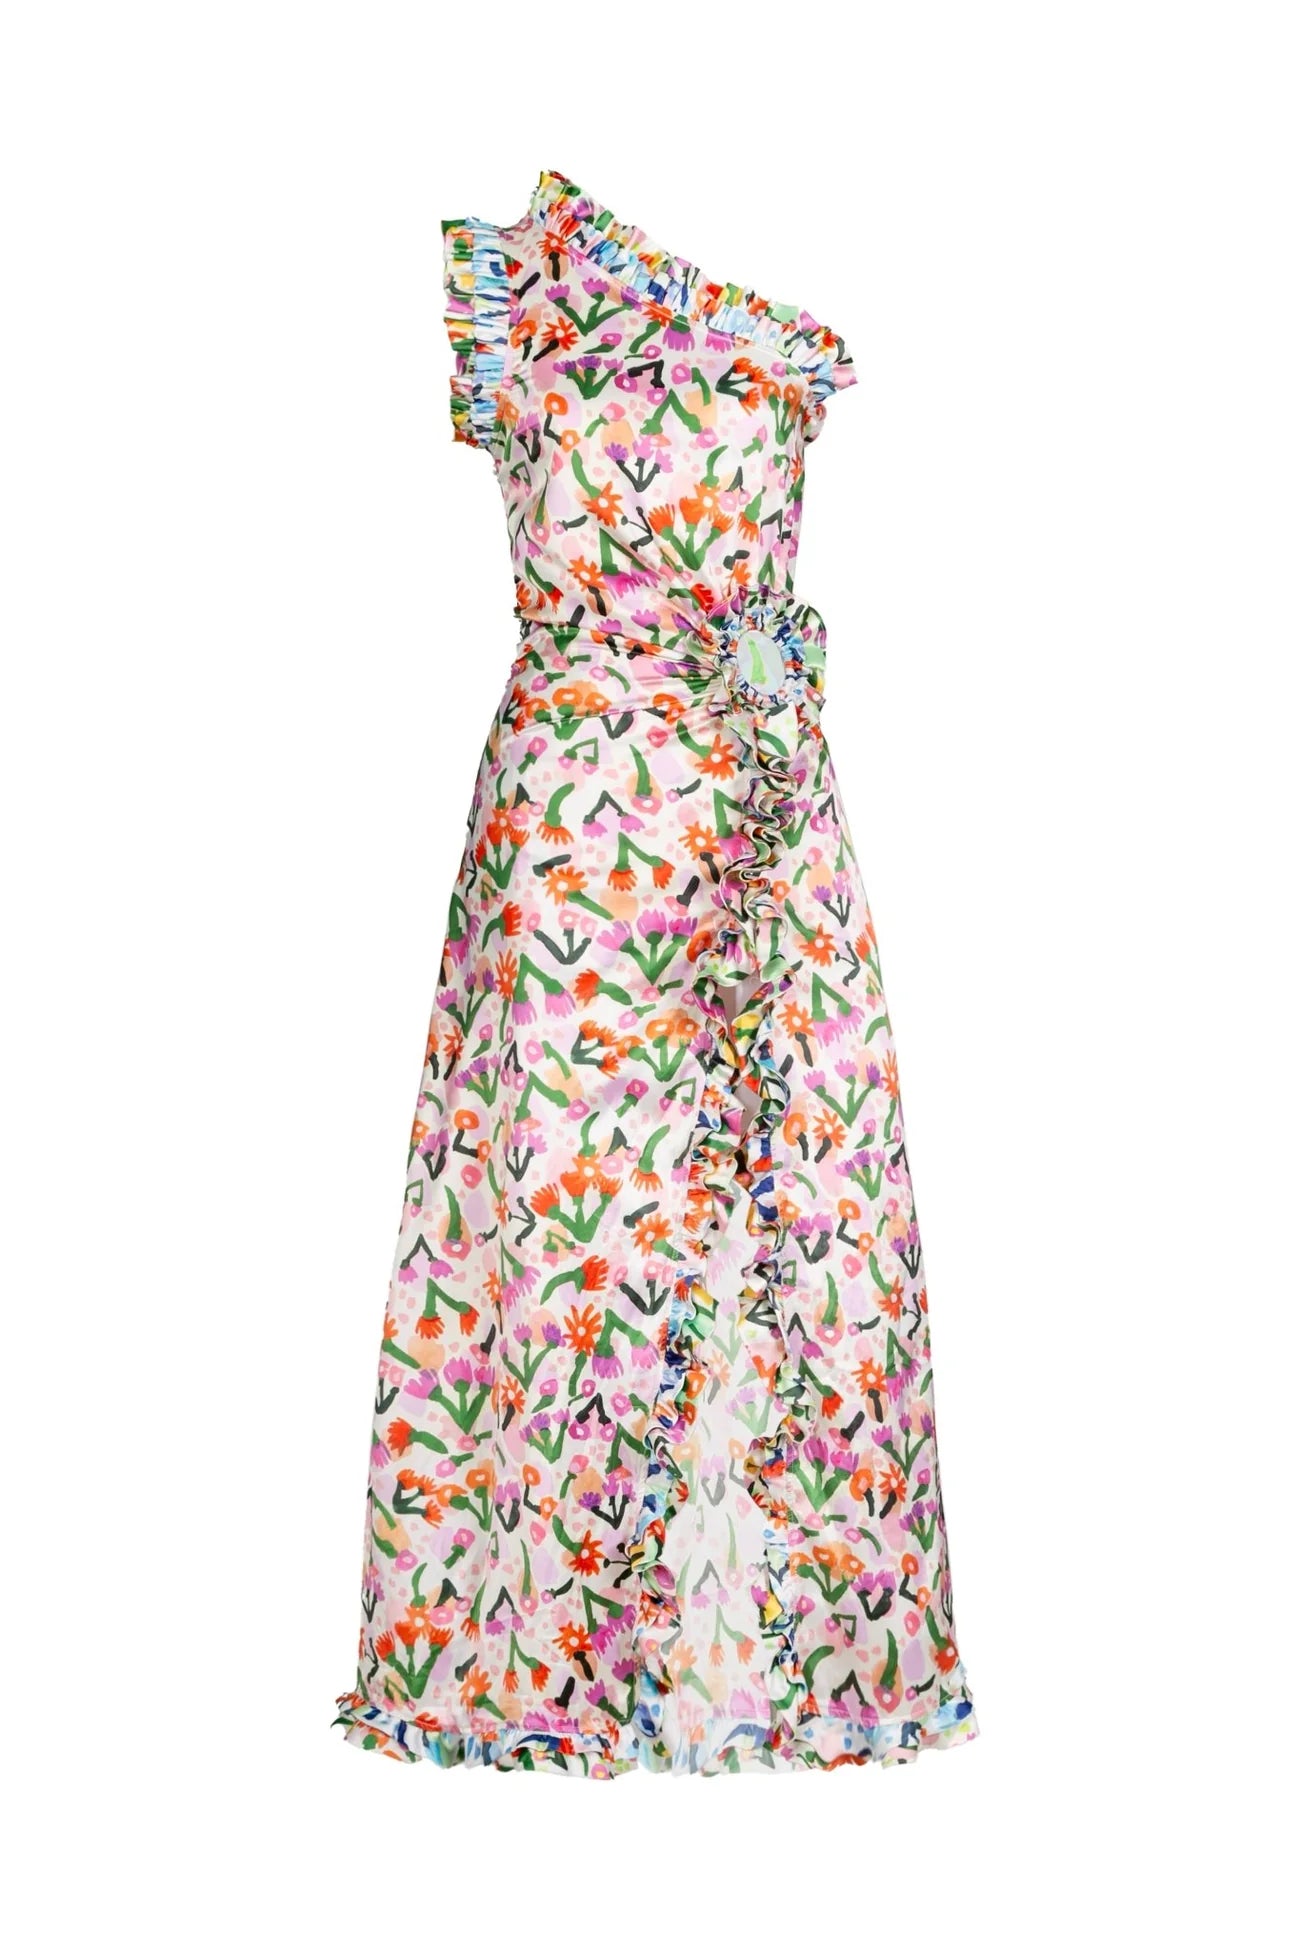 Varuna floral printed dress with one shoulder asymetrical top